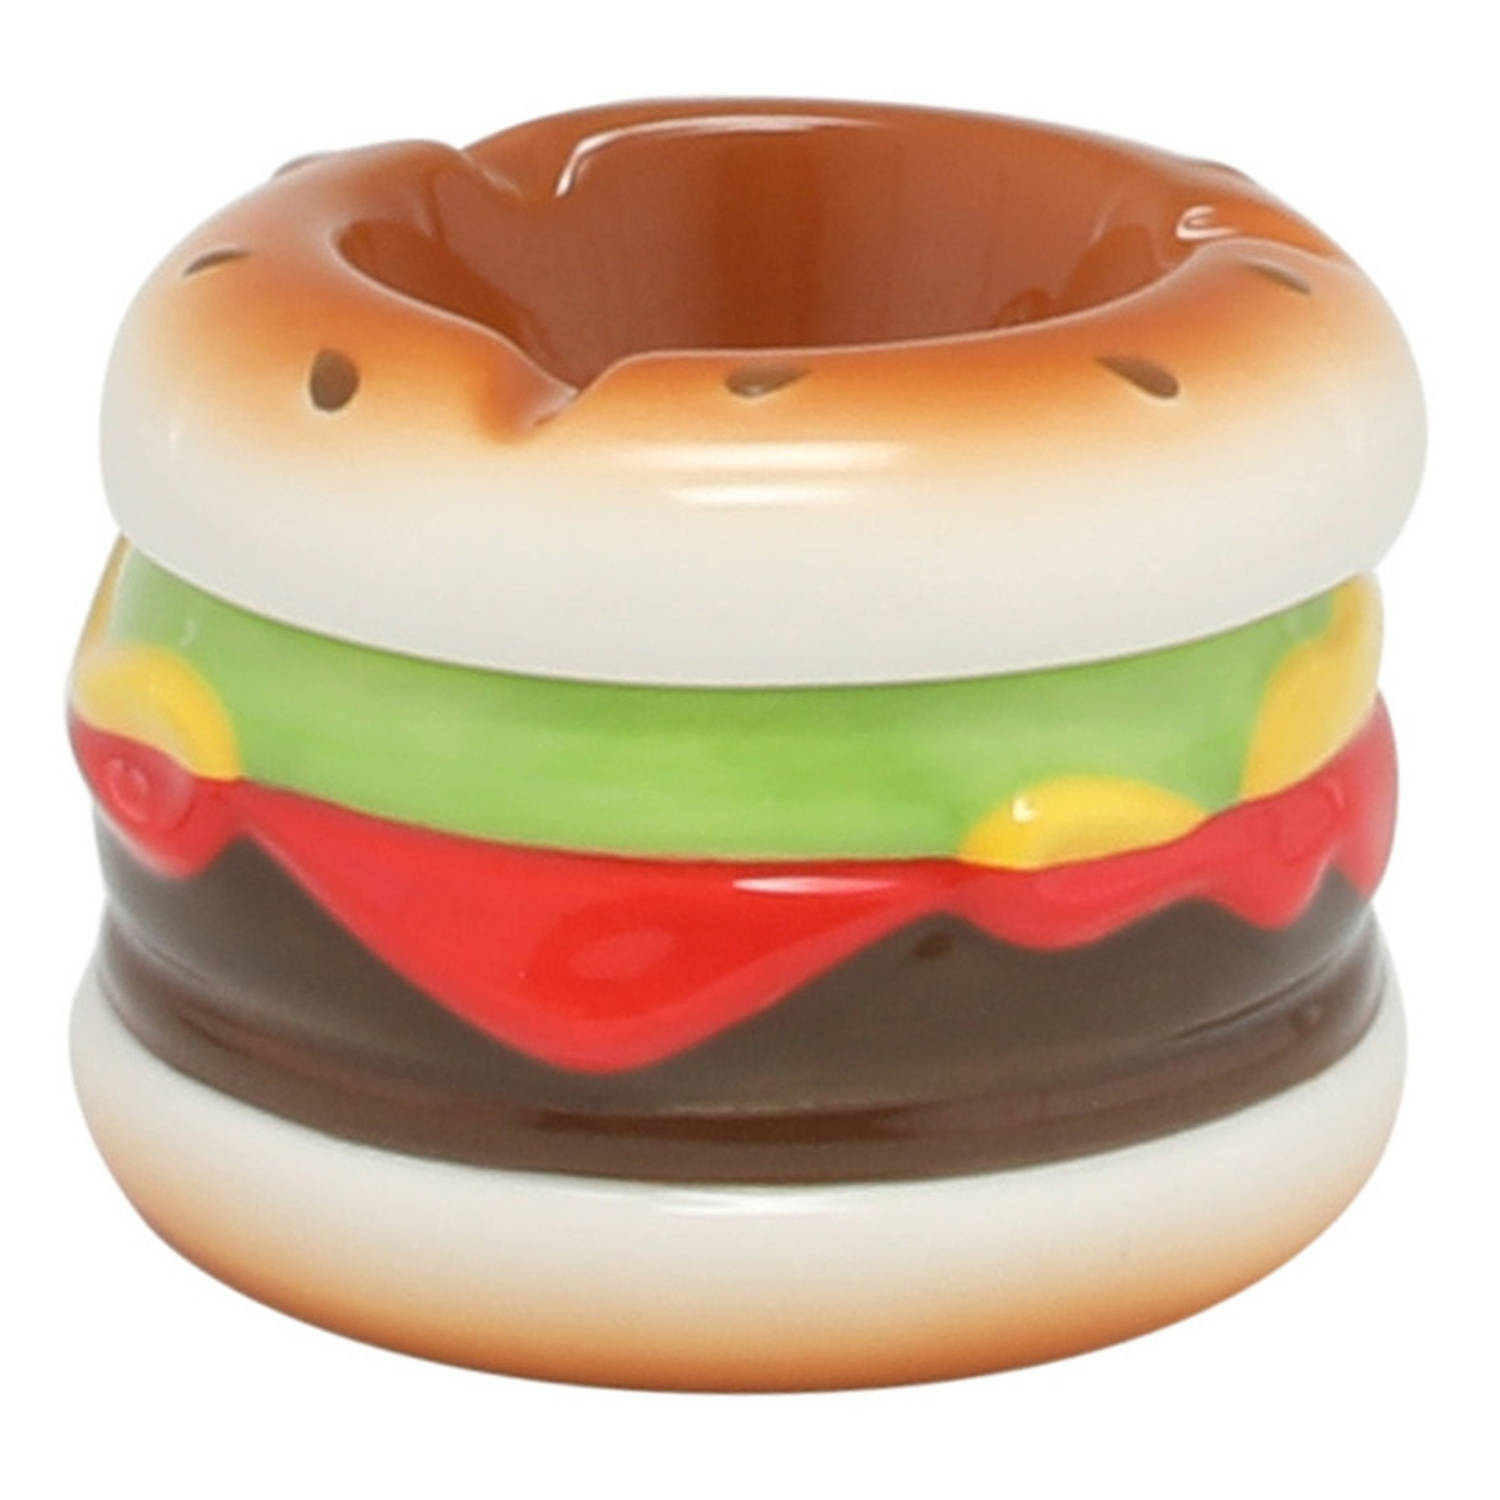 Hamburger asbak rond dolomiet multi-kleur 7 x 9 cm - Asbakken